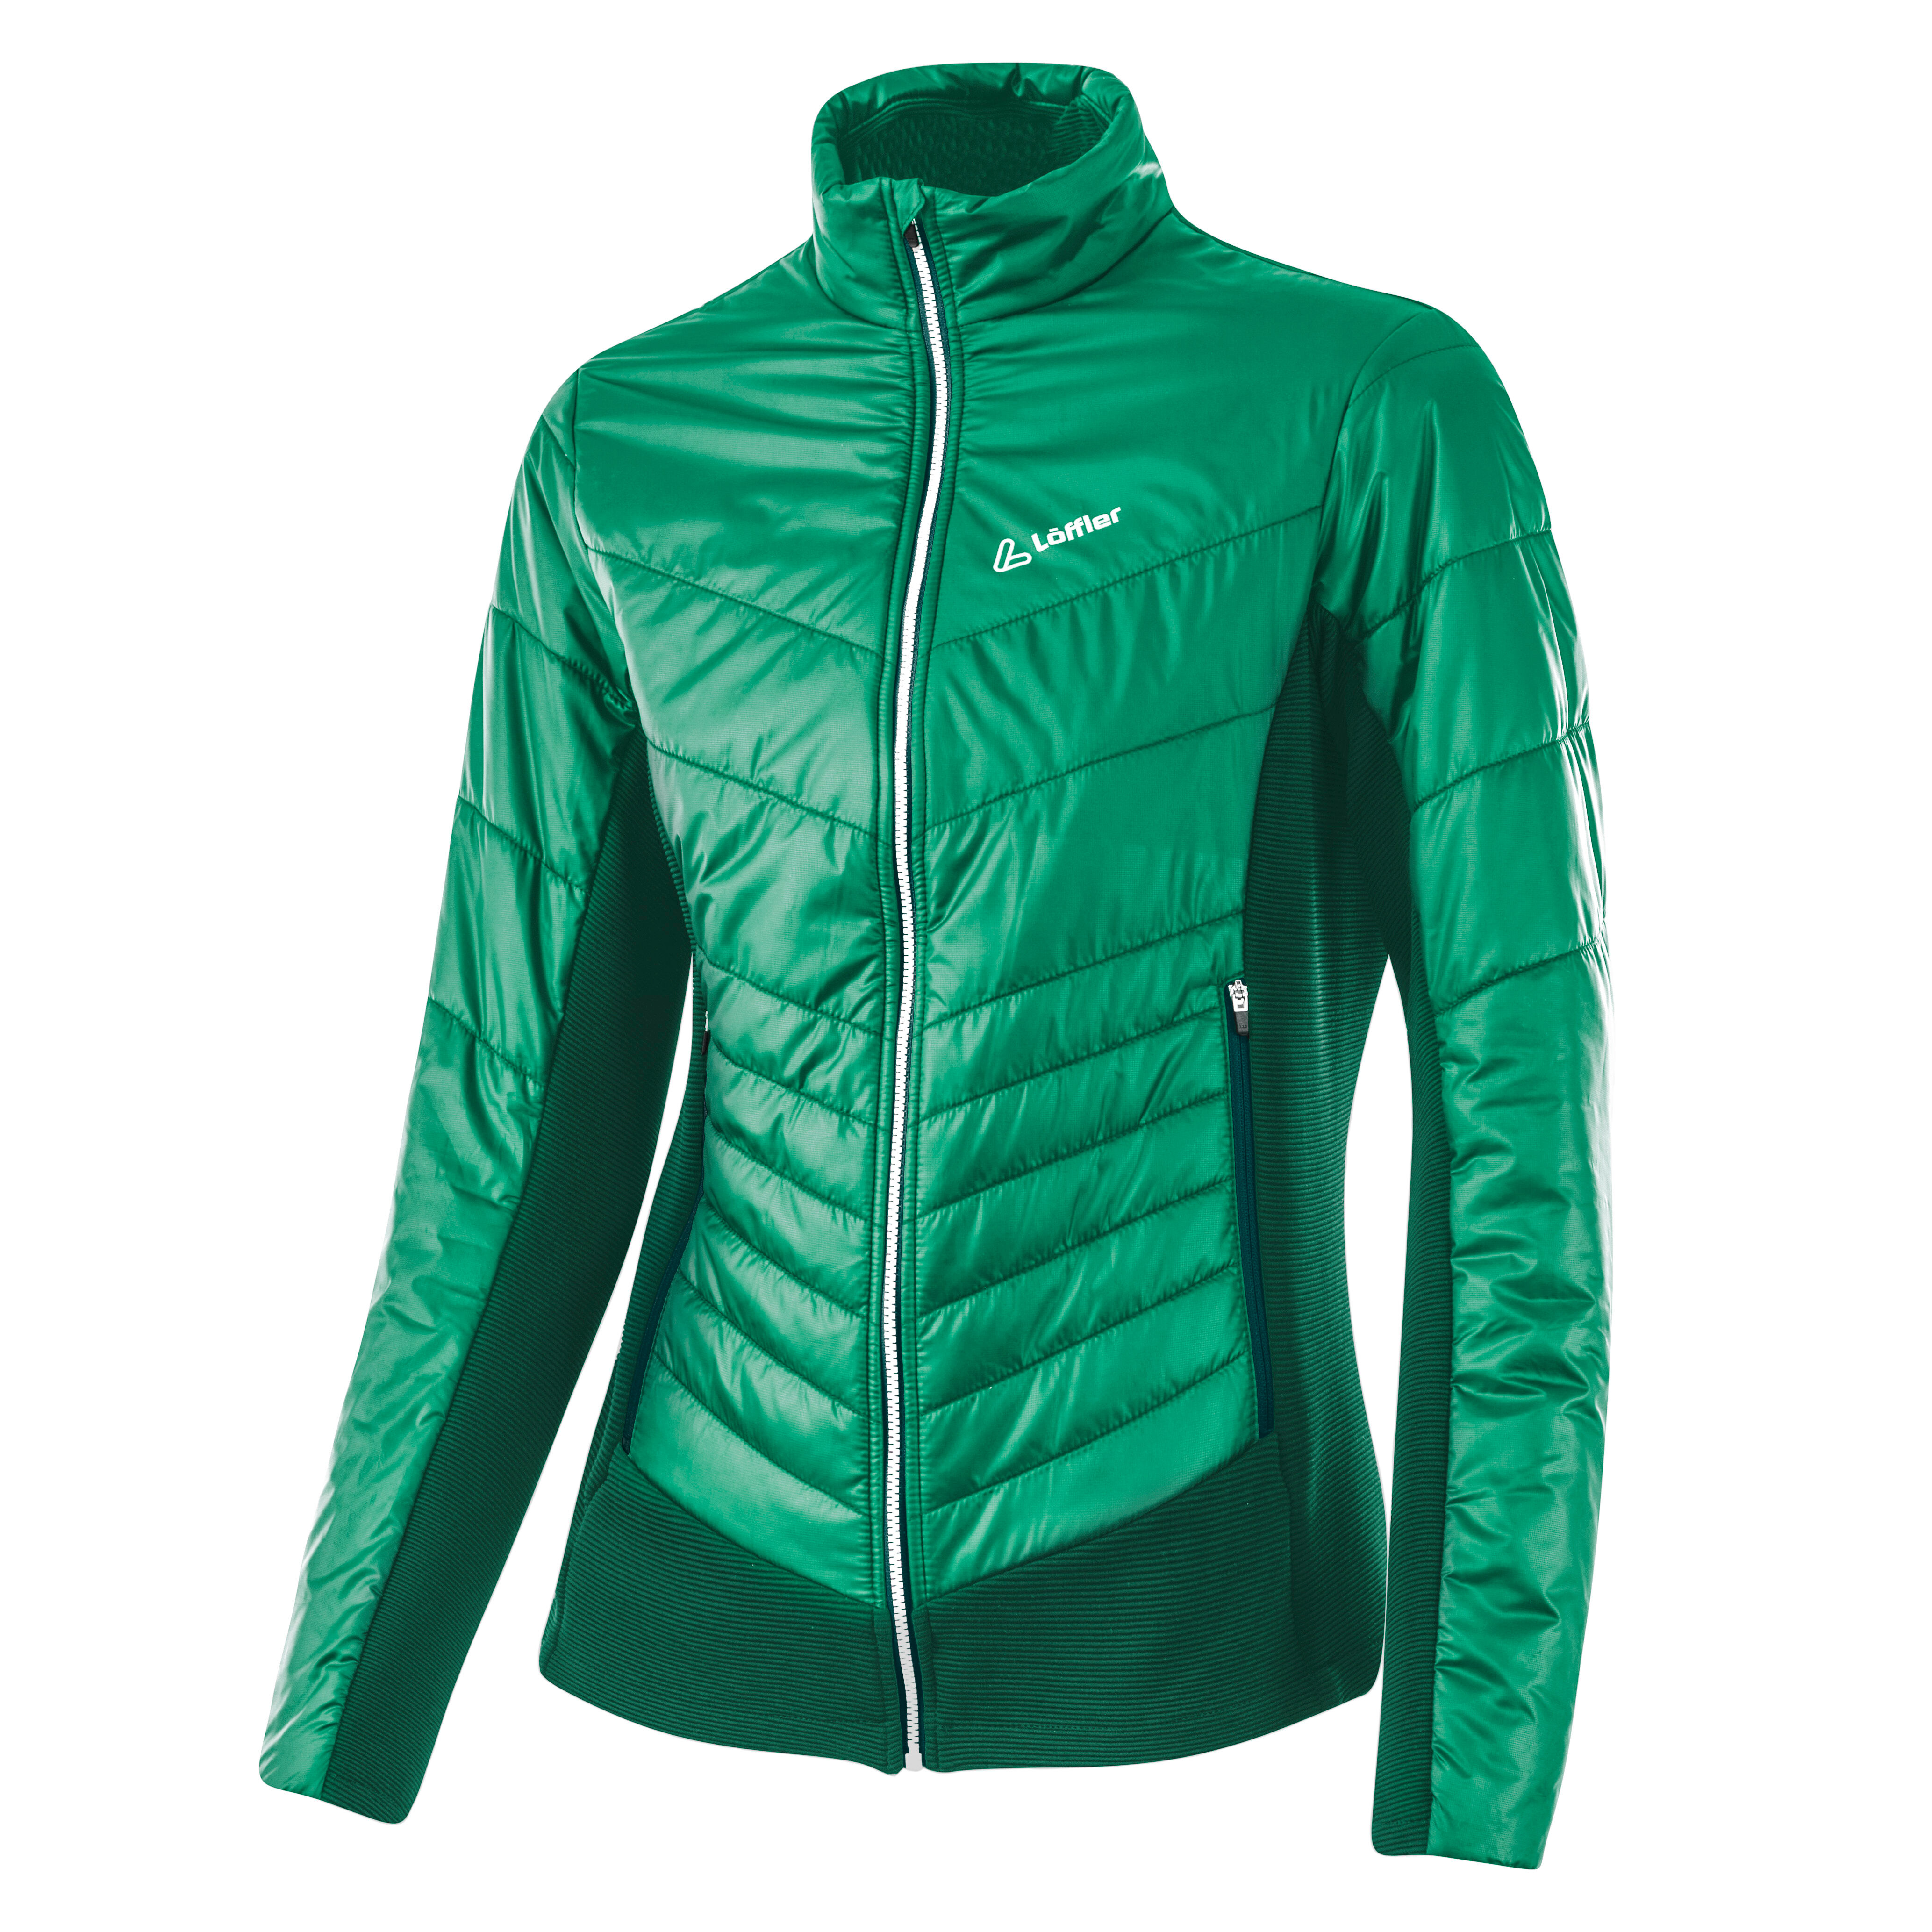 Loeffler Hybridjacket Pl60 - Windproof jacket - Women's